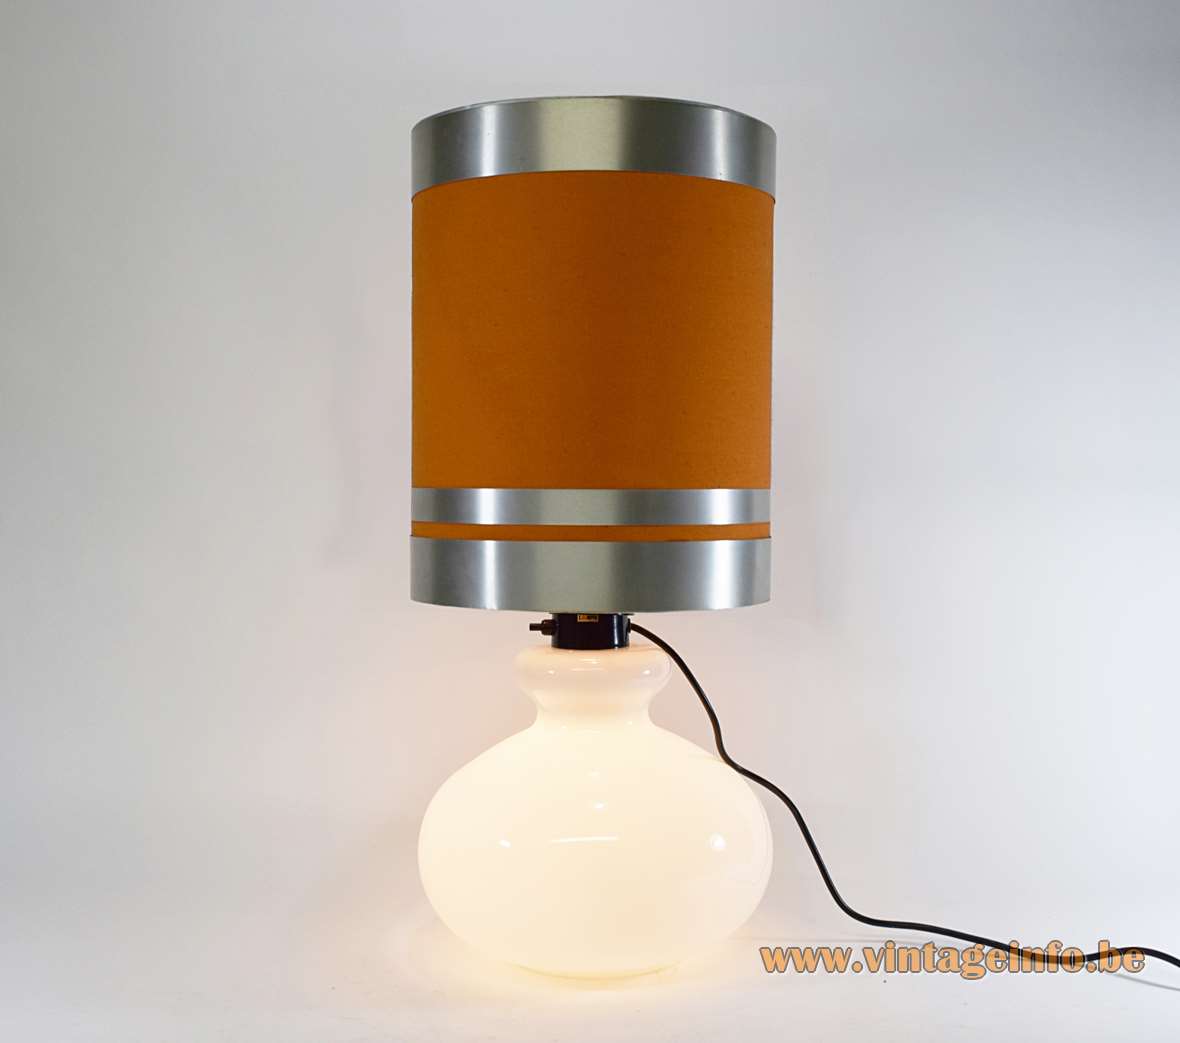 Dijkstra opal glass table lamp white globe base tubular fabric lampshade 1960s 1970s 2 lamp sockets